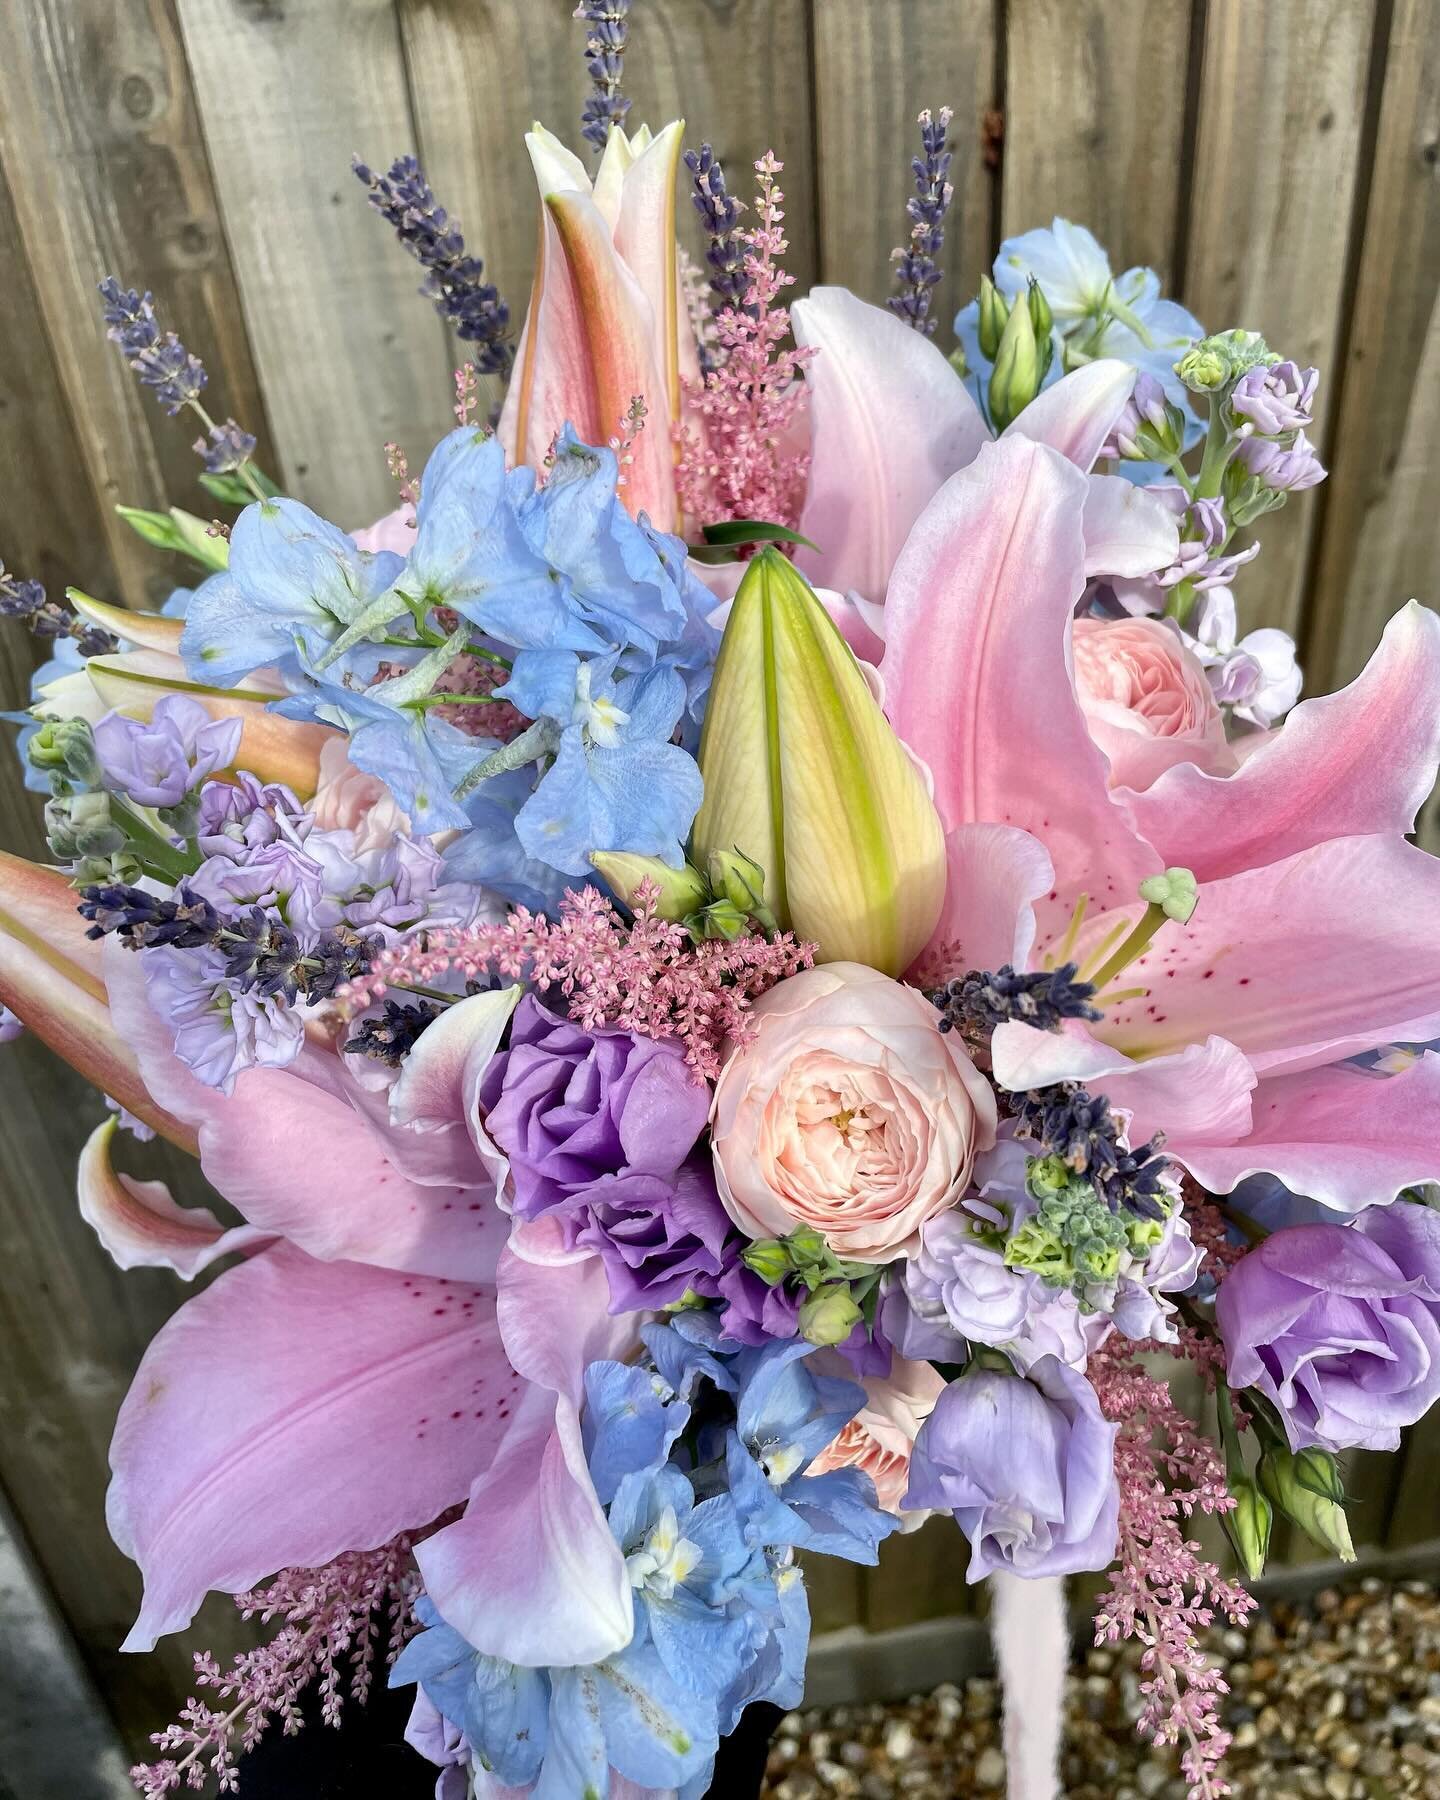 Bridal bouquet in pastels #babyblue #babypink #bridalbouquet #handtiedbouquet #gloucesterflorist #longlevensflowers